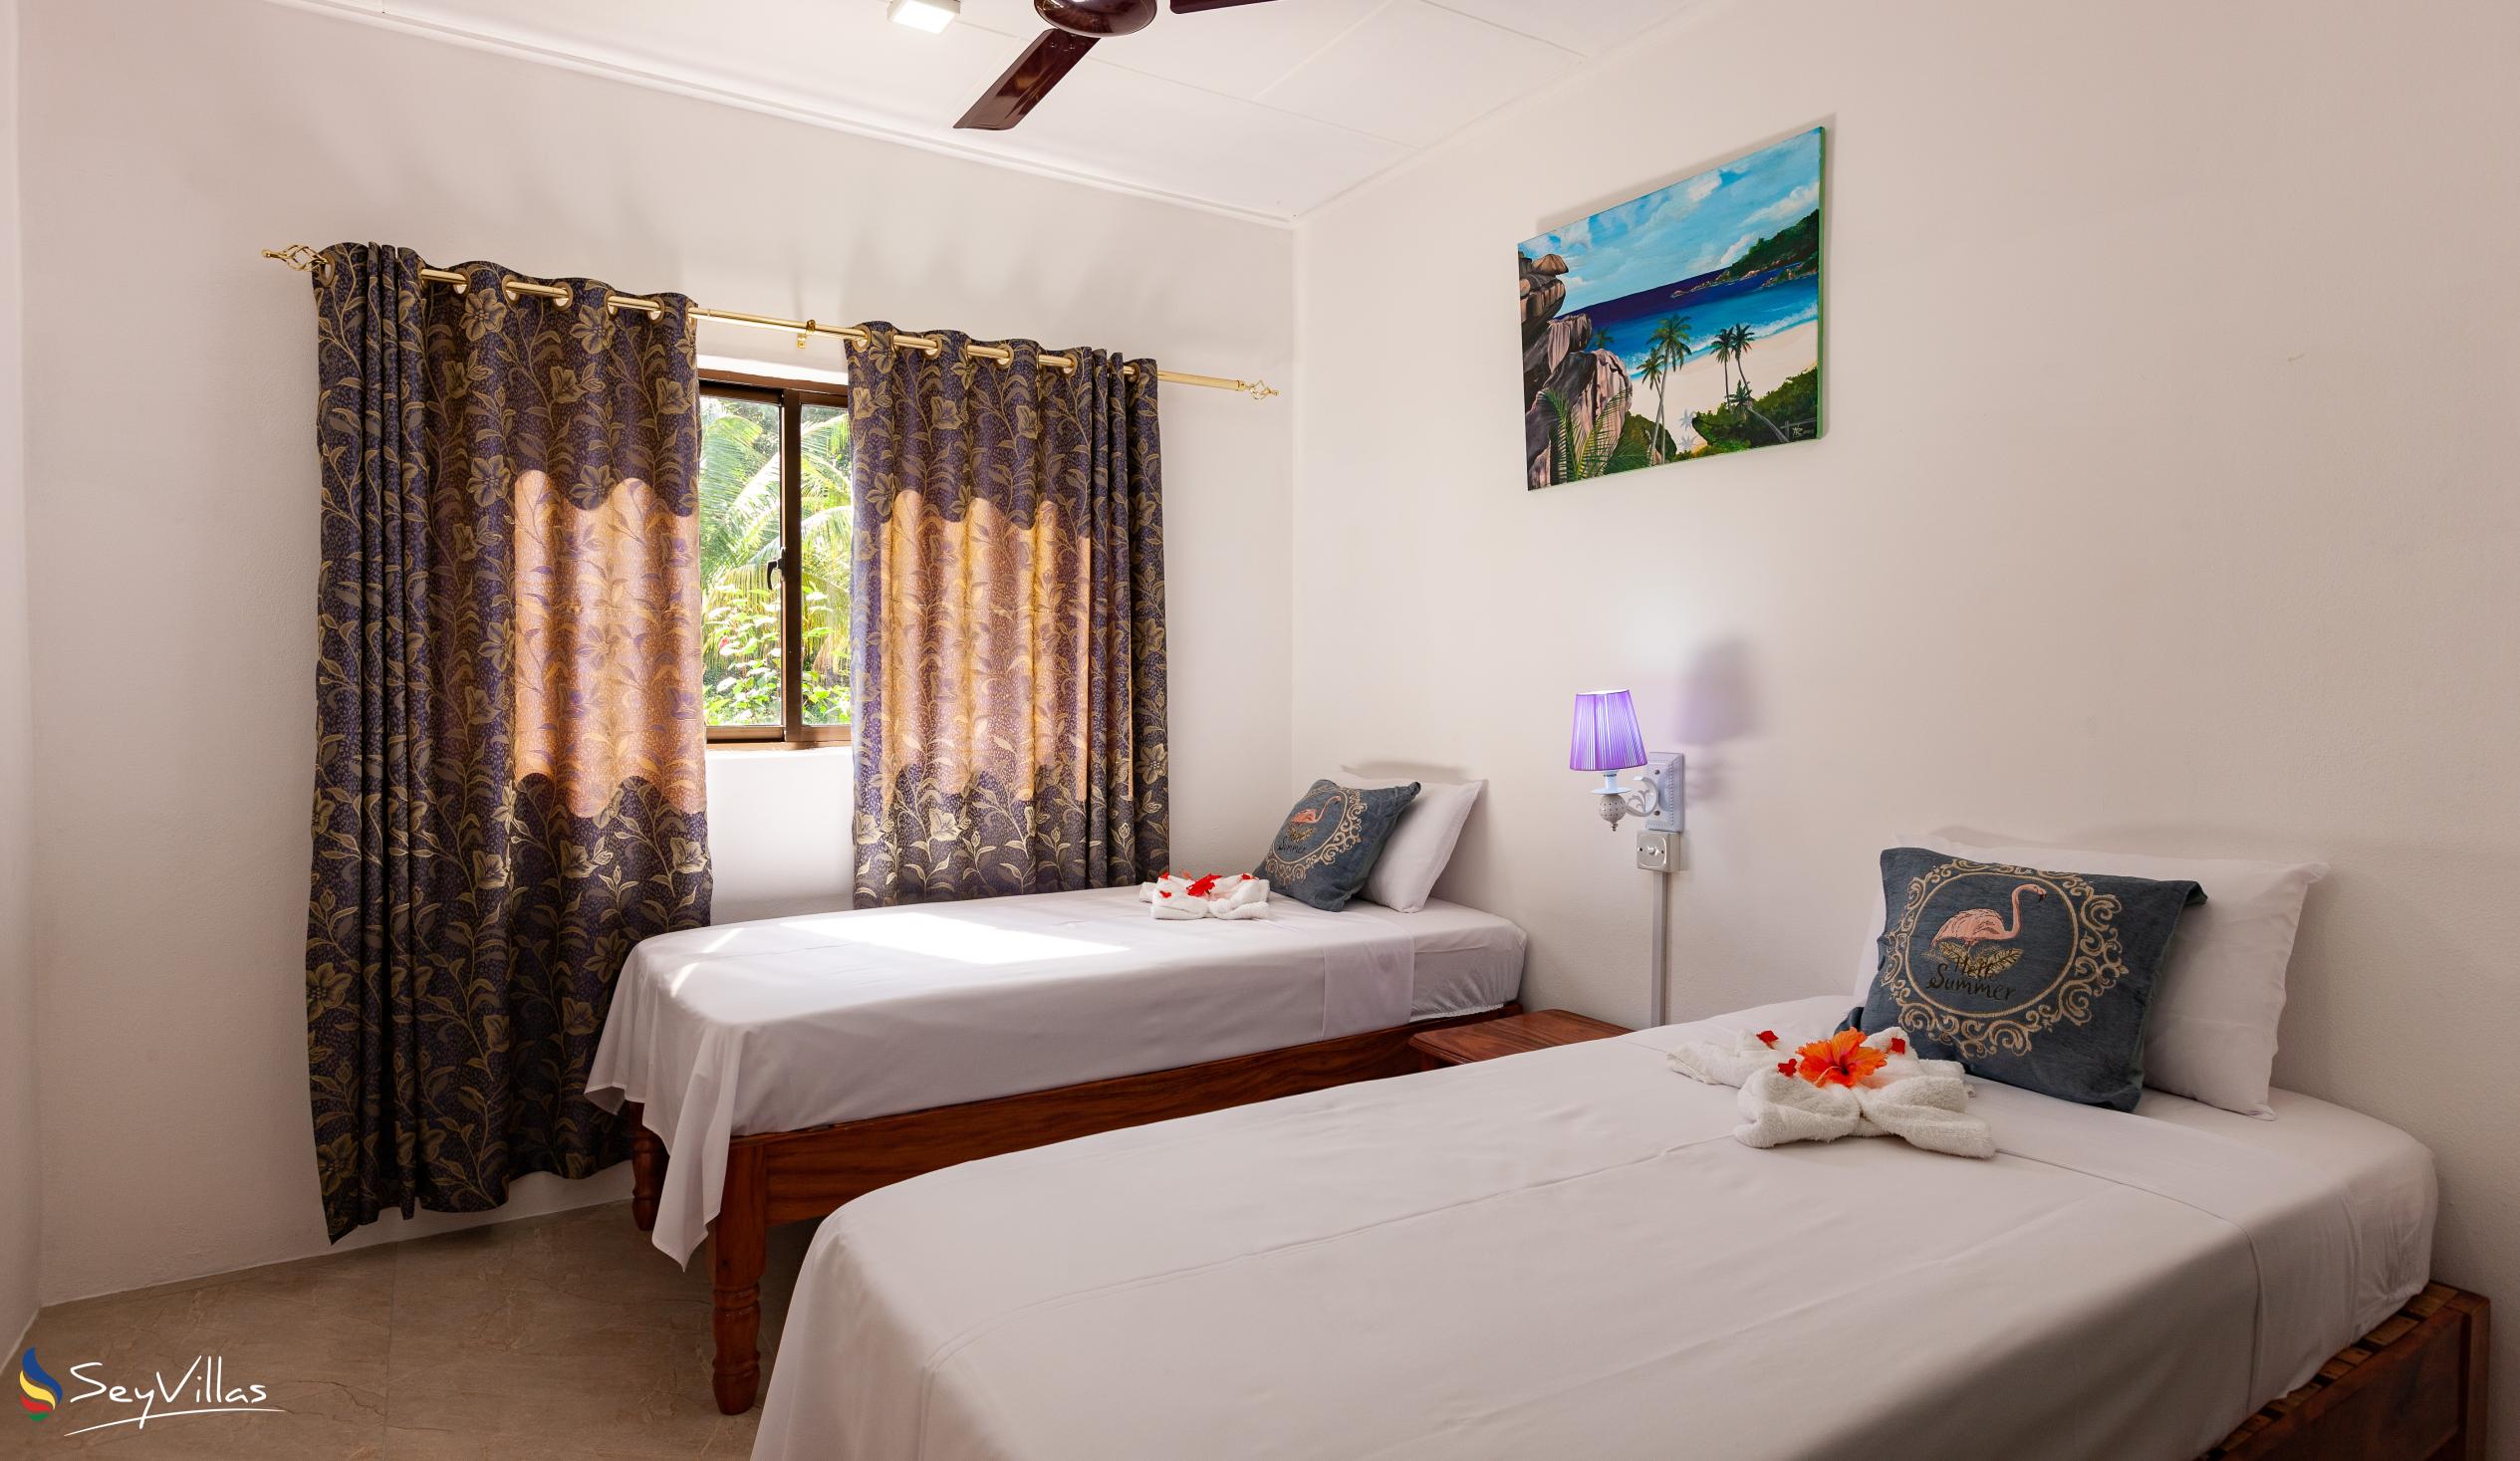 Foto 38: Anse Grosse Roche Beach Villa - Familienappartement mit 2 Schlafzimmern - La Digue (Seychellen)